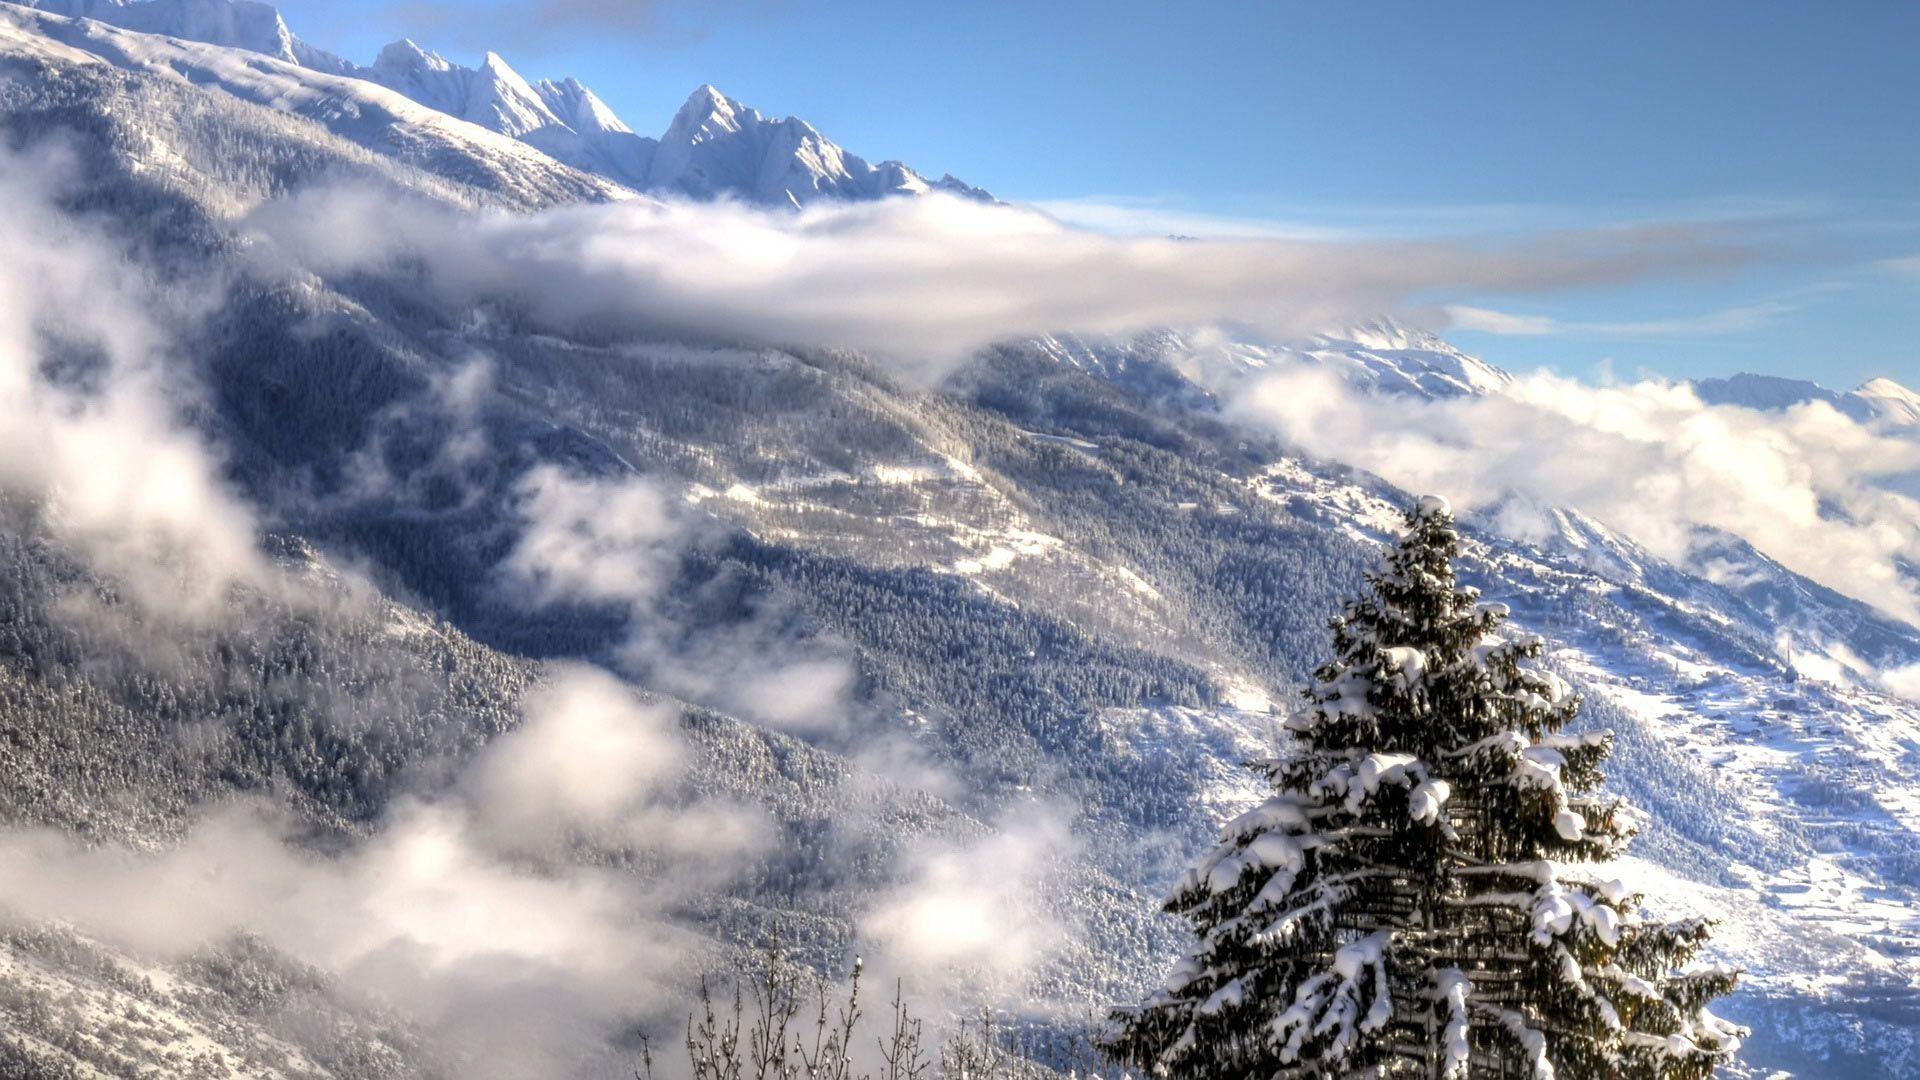 Desktop Wallpaper · Gallery · Nature · Winter Alps. Free